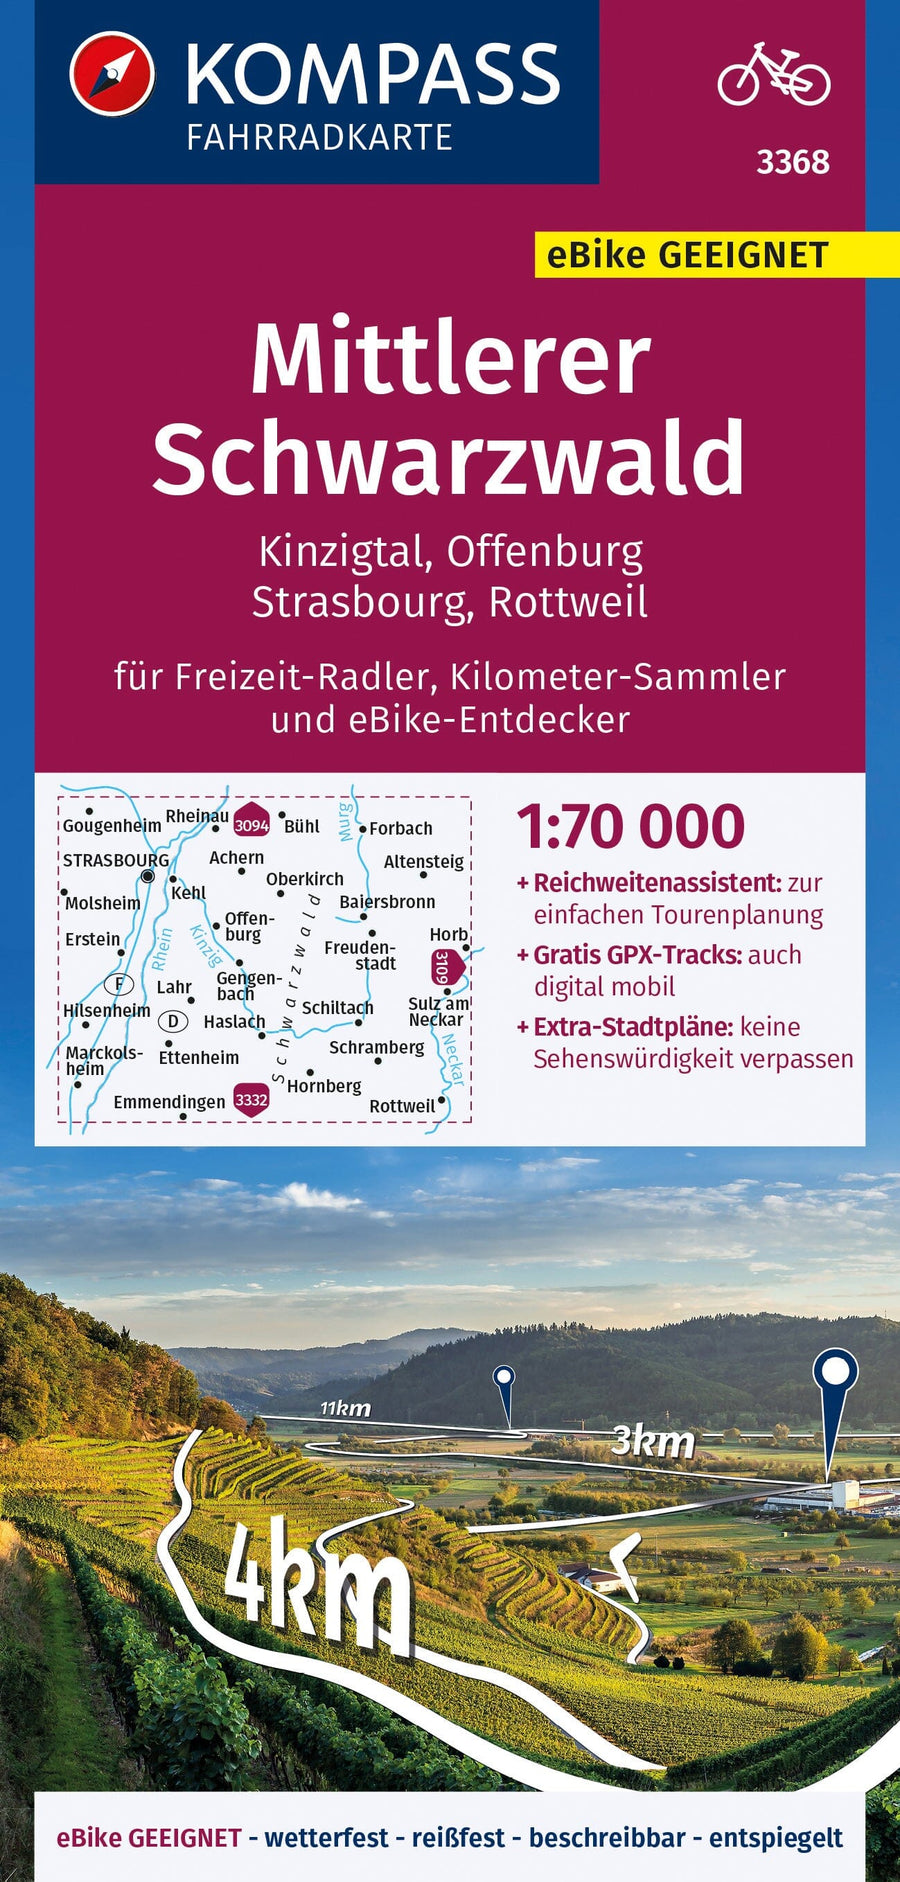 Carte cycliste n° F3368 - Schwarzwald Mittlerer, Kinzigtal, Offenburg, Strasbourg (Allemagne) | Kompass carte pliée Kompass 